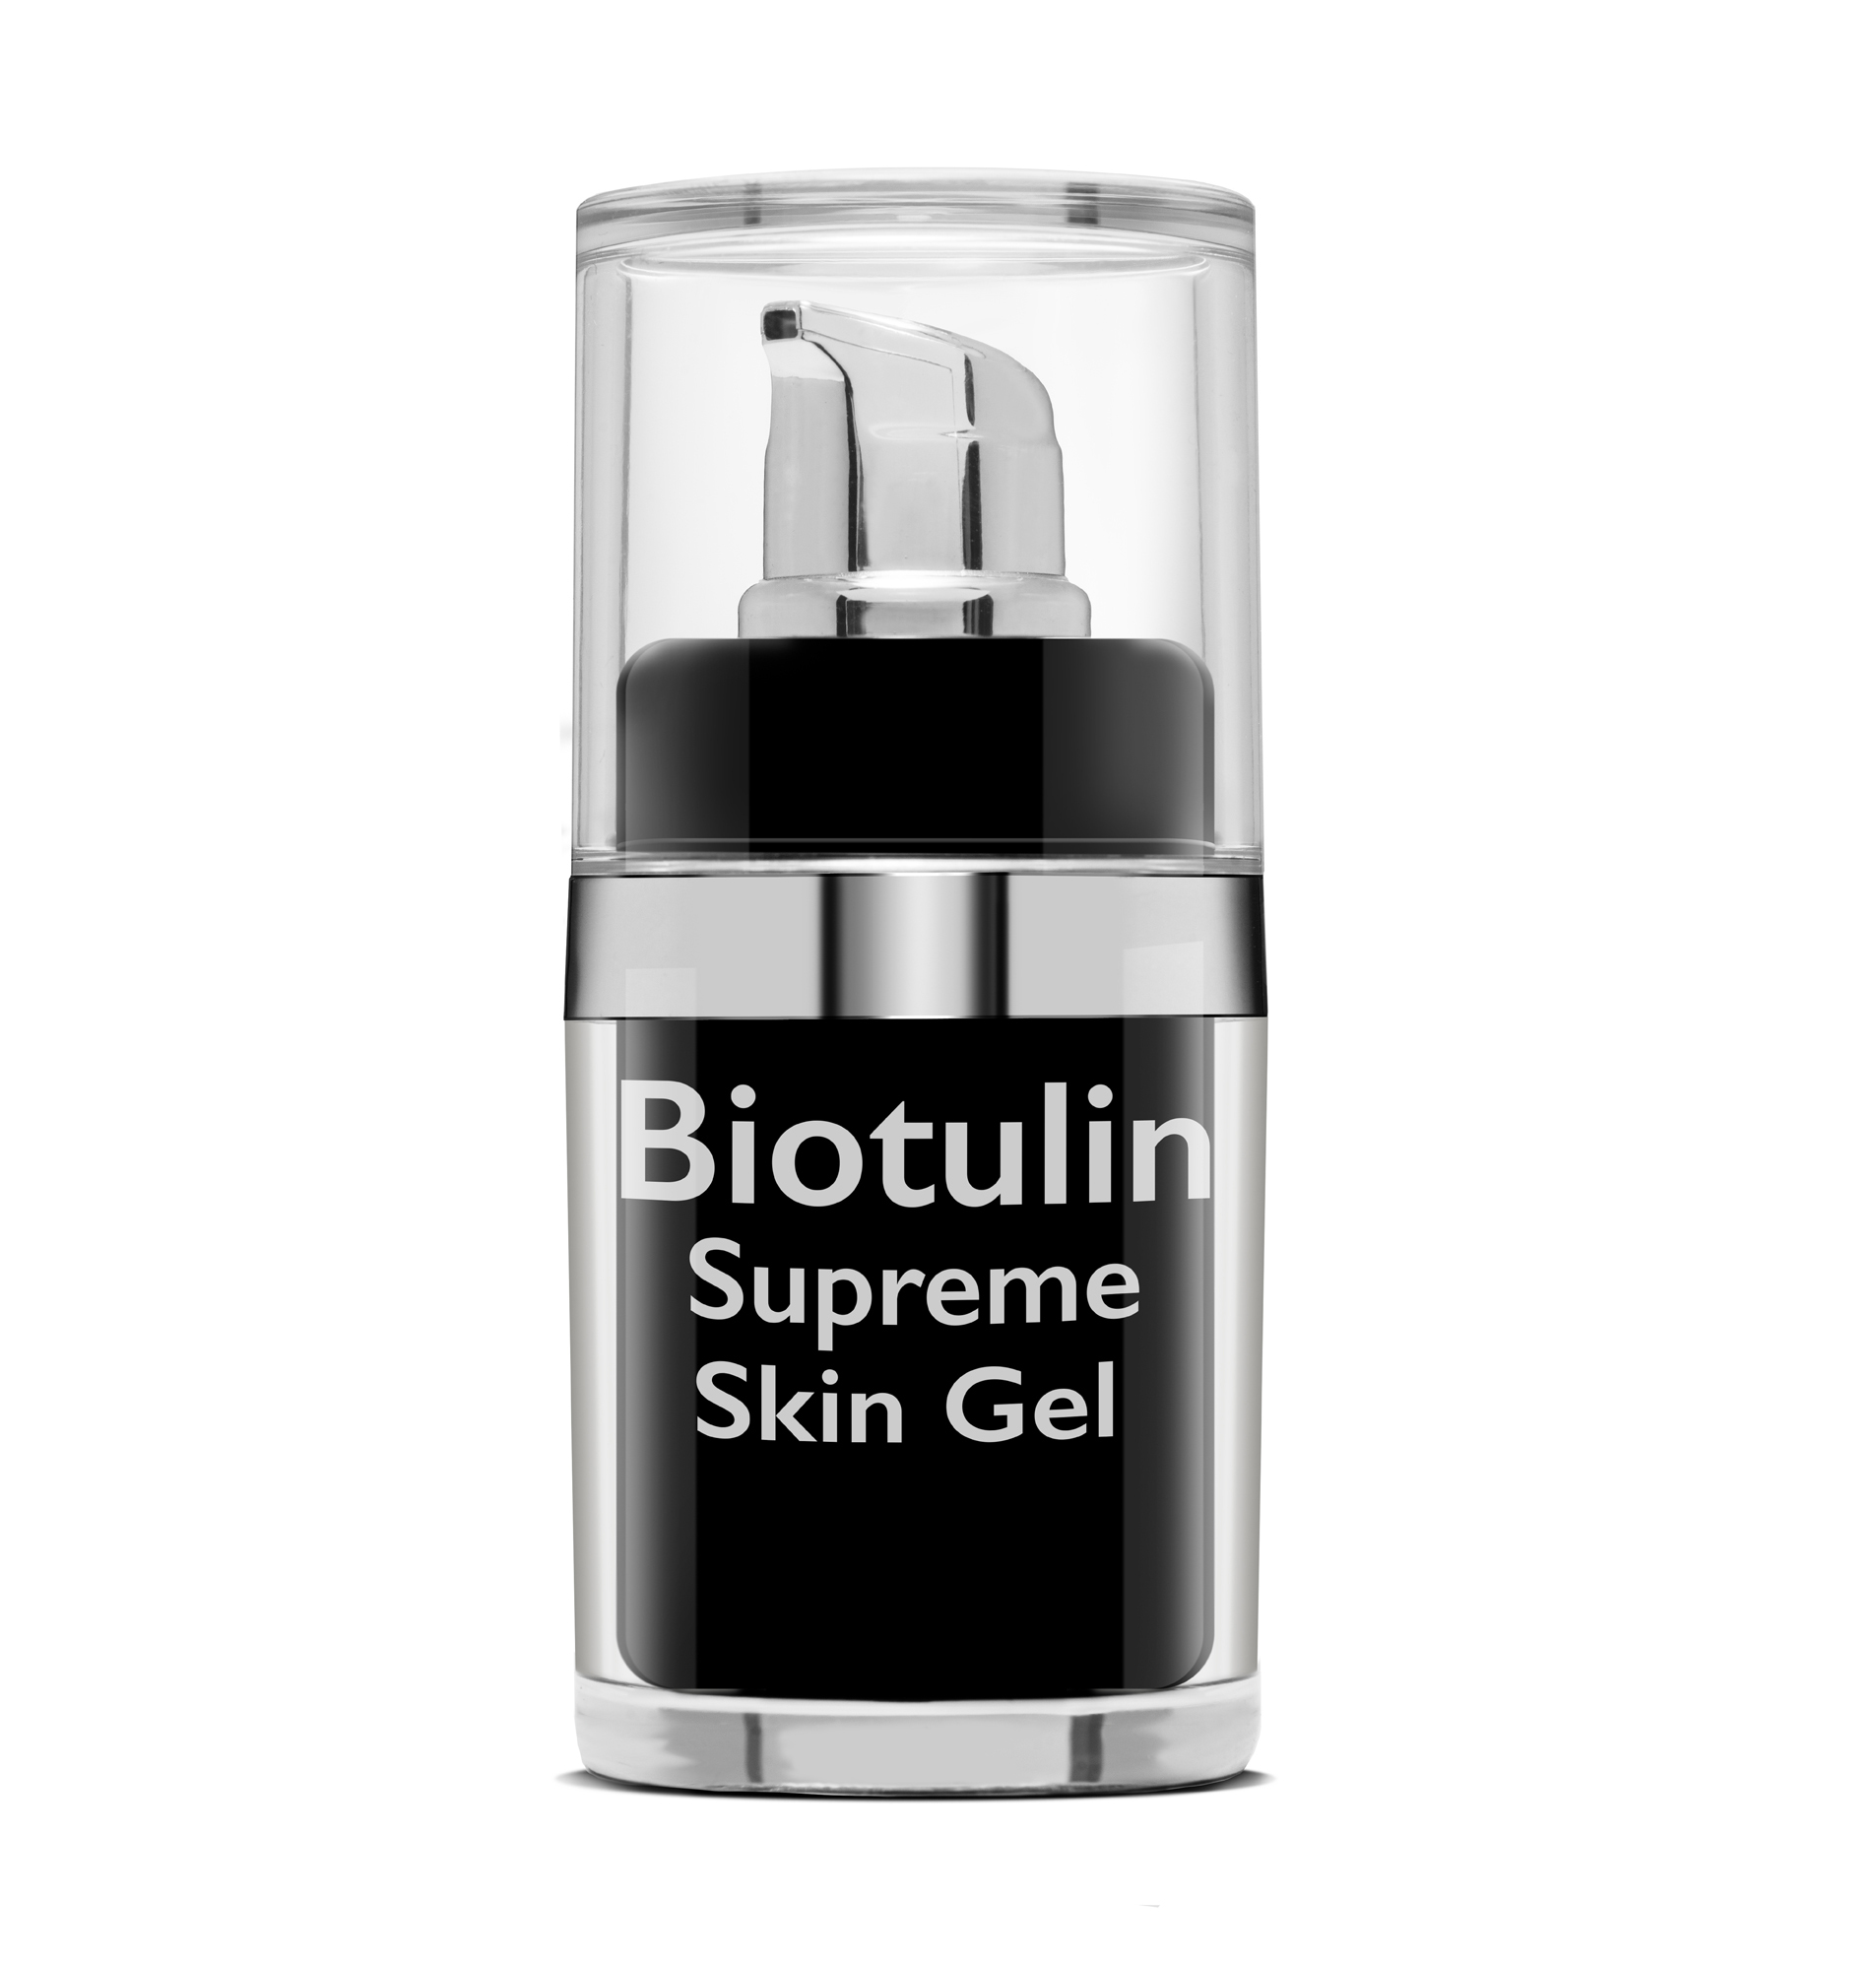 Biotulin Supreme Skin Gel (15ml**)